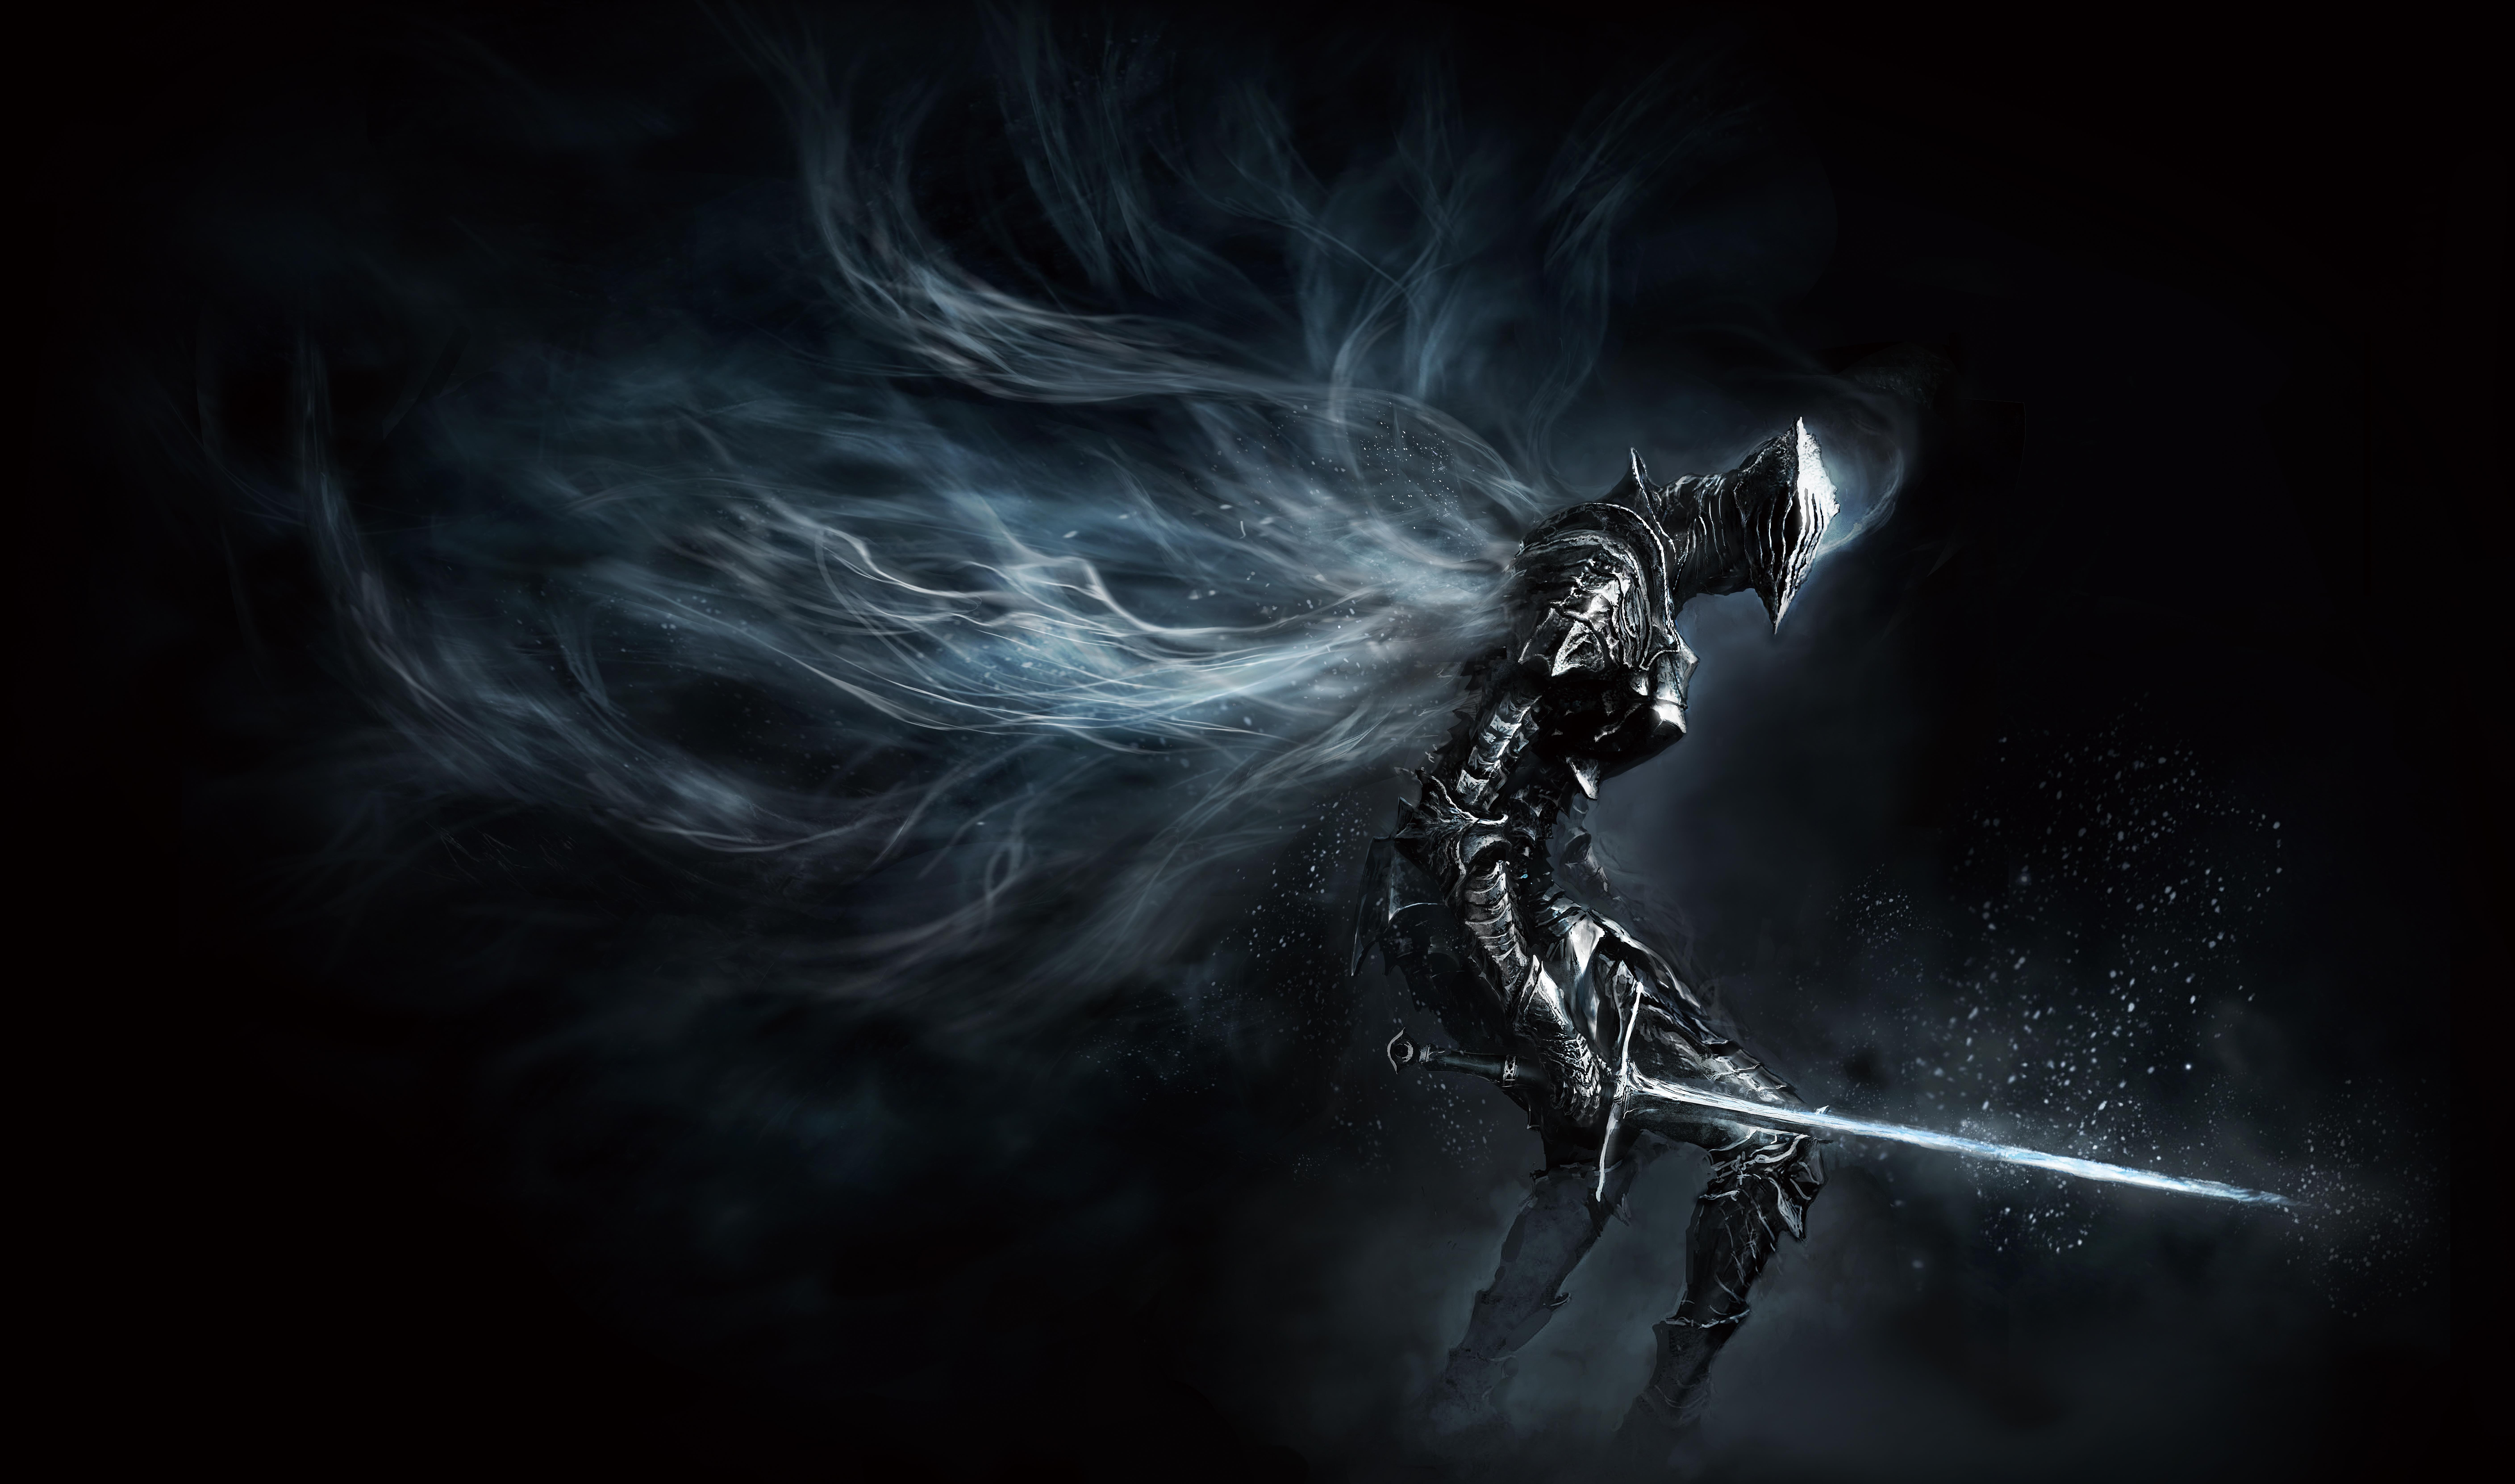 4K Dark Souls III Wallpaper and Background Image